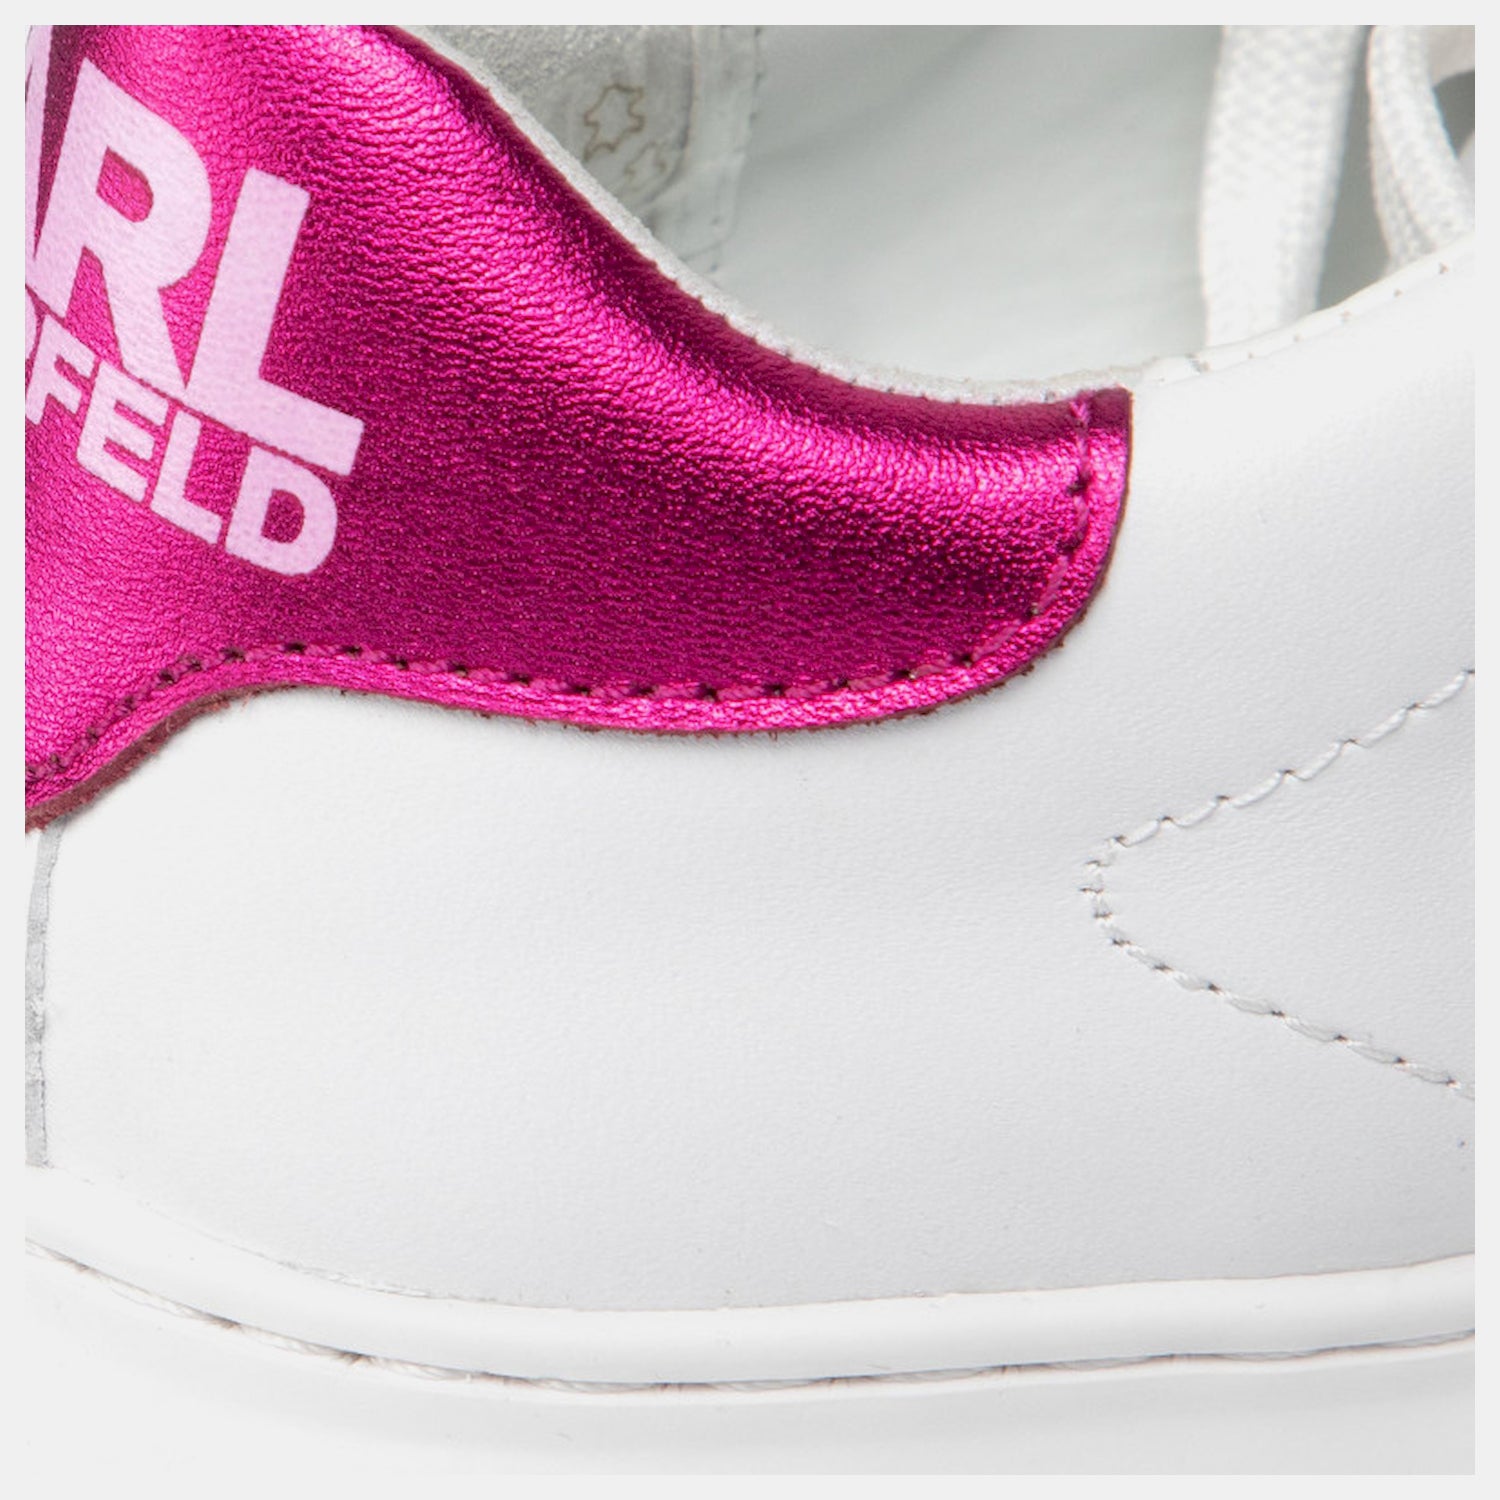 Karl Lagerfeld Sapatilhas Sneakers Shoes Kl62530 Whi Pink Branco Rosa_shot6